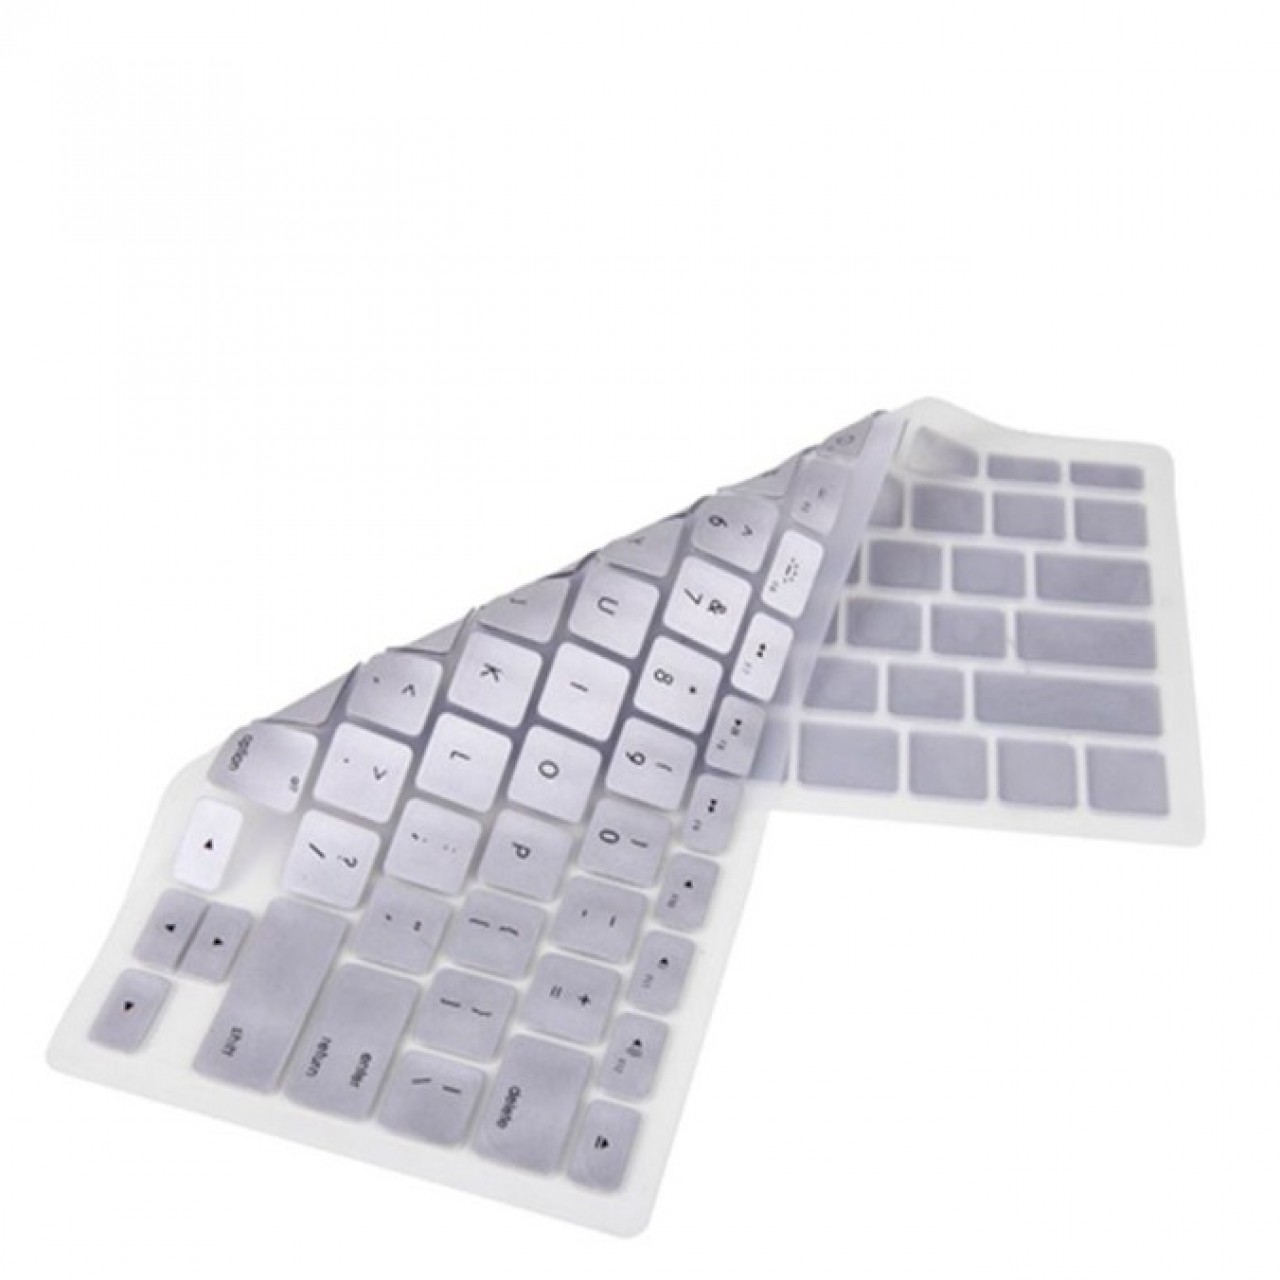 Macbook Pro 17 Inch Color Key Skin - Silver